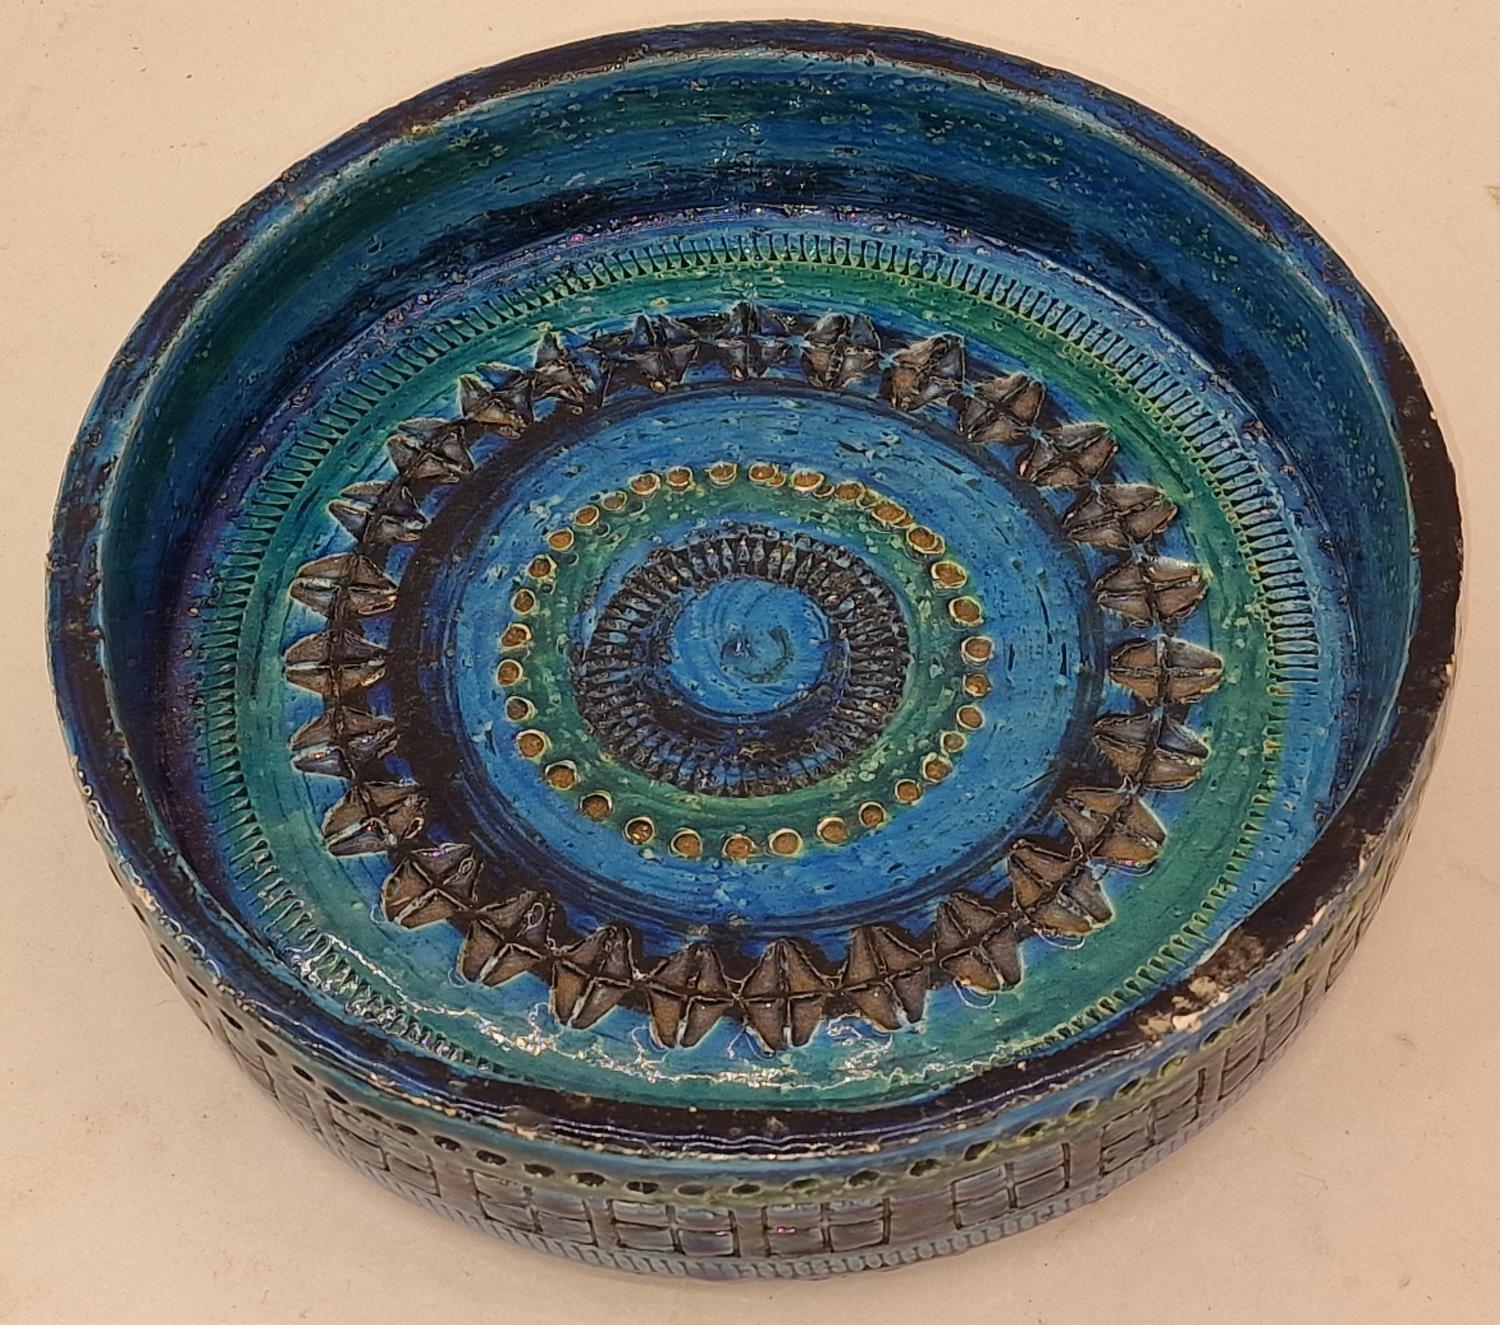 Ceramic bowl in the style of Aldo Londi Italy style in Rimmini blue 20cm dia, 5cm deep - Image 2 of 3